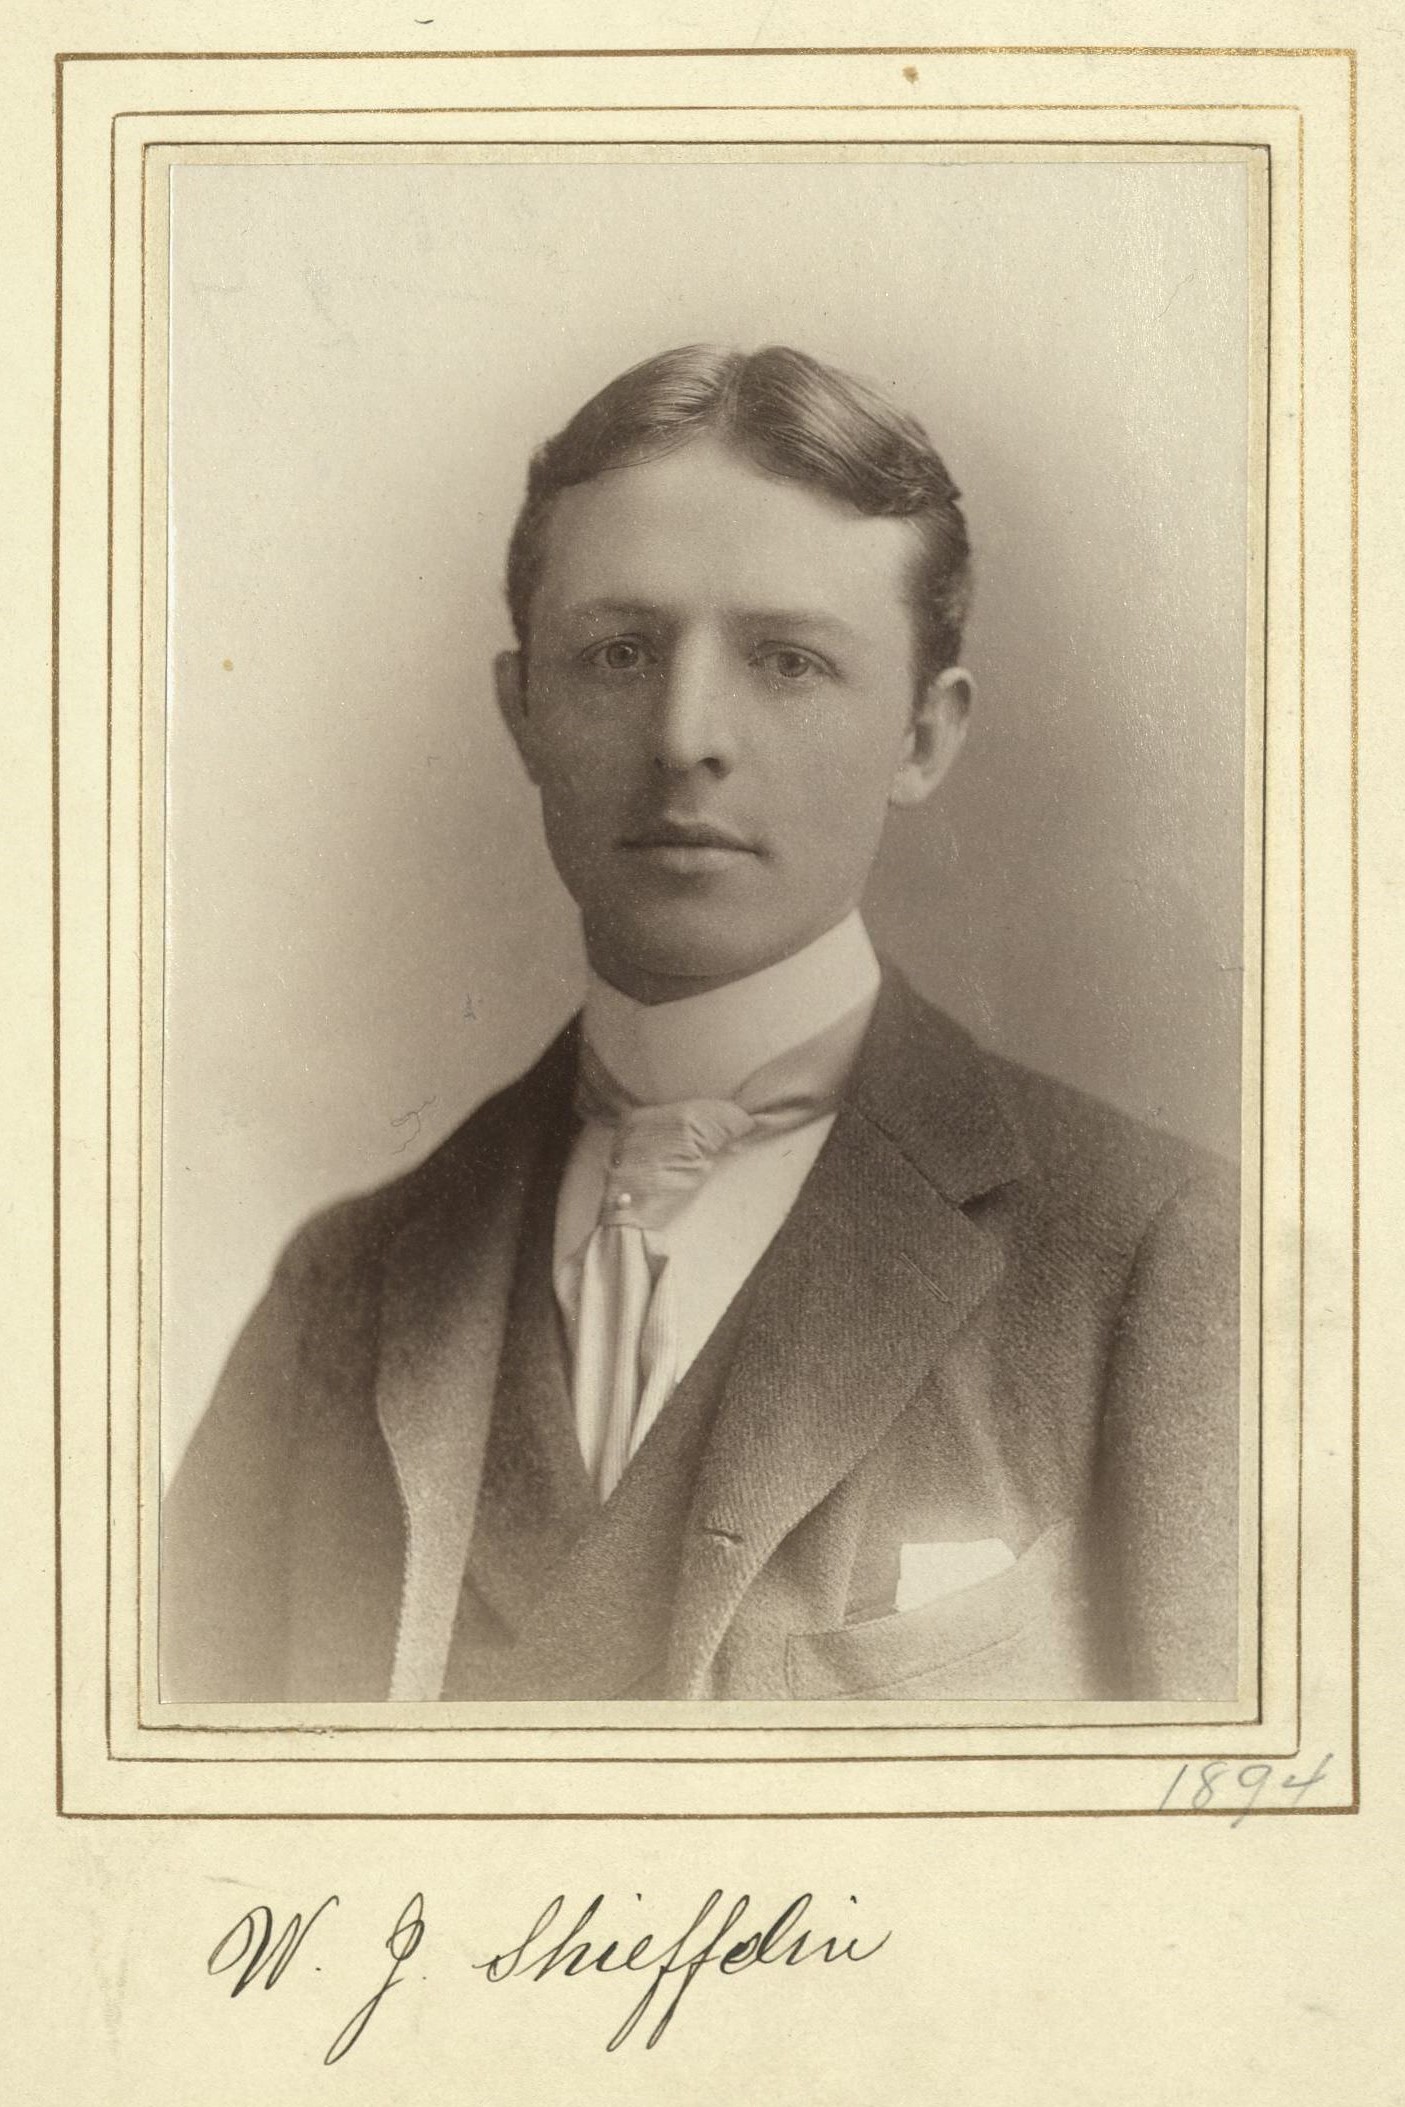 Member portrait of William J. Schieffelin